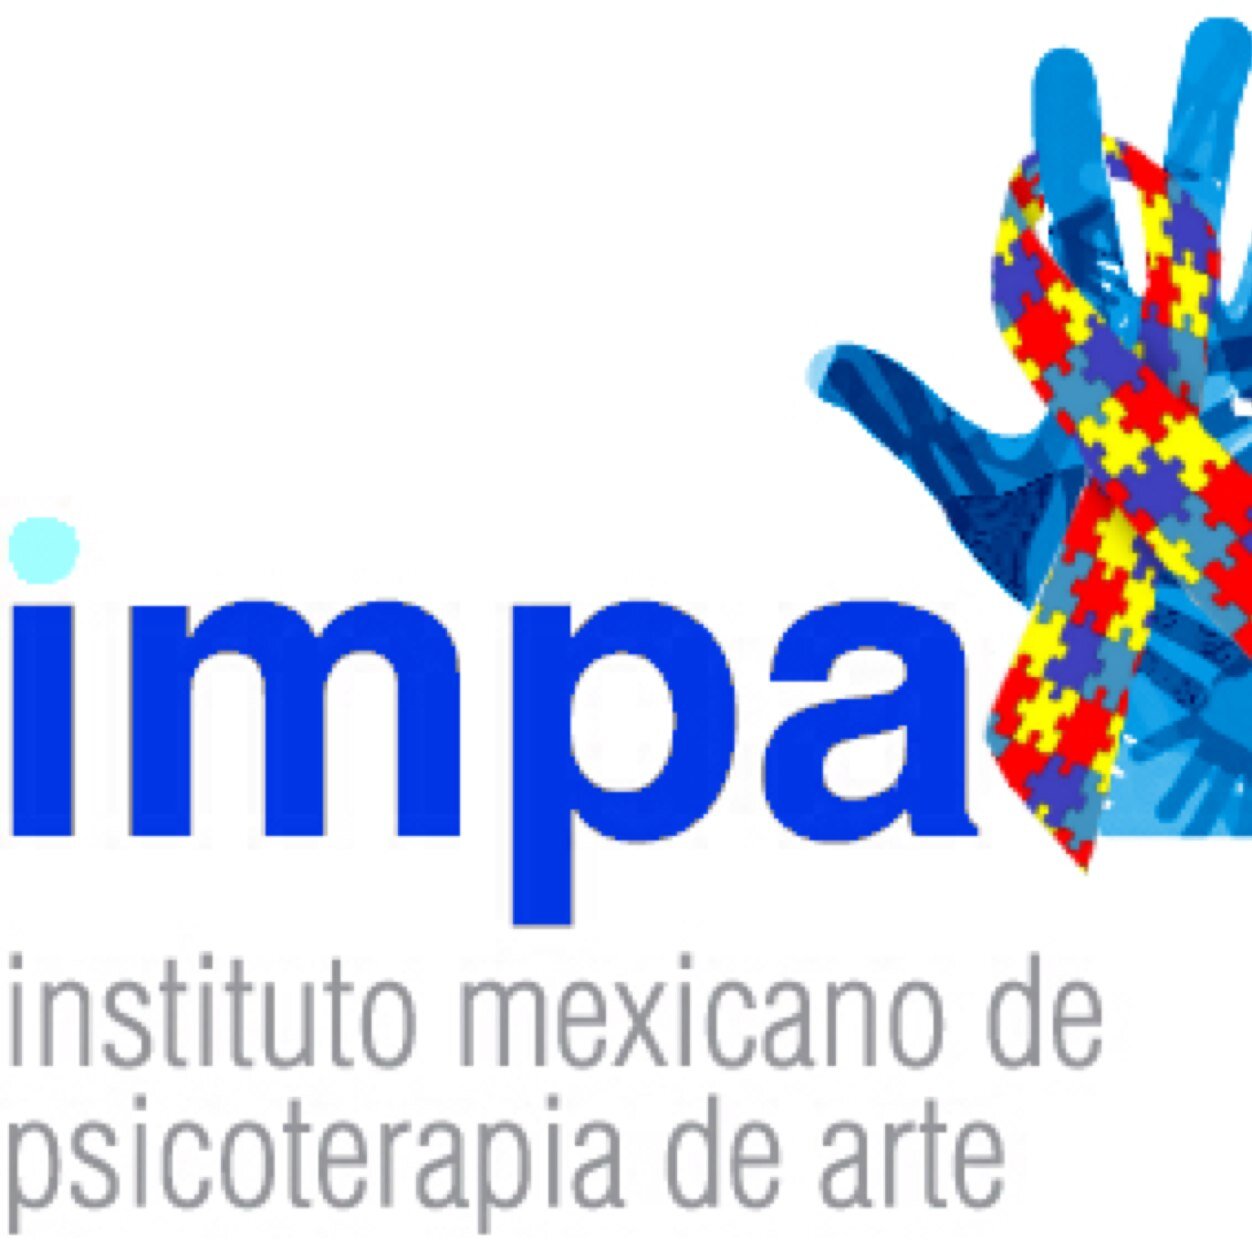 Instituto Mexicano de Psicoterapia de Arte (Mexican Institute of Art Psychotherapy)  INFO: psicoterapiadearteimpa@gmail.com http://t.co/krng5bAPGh